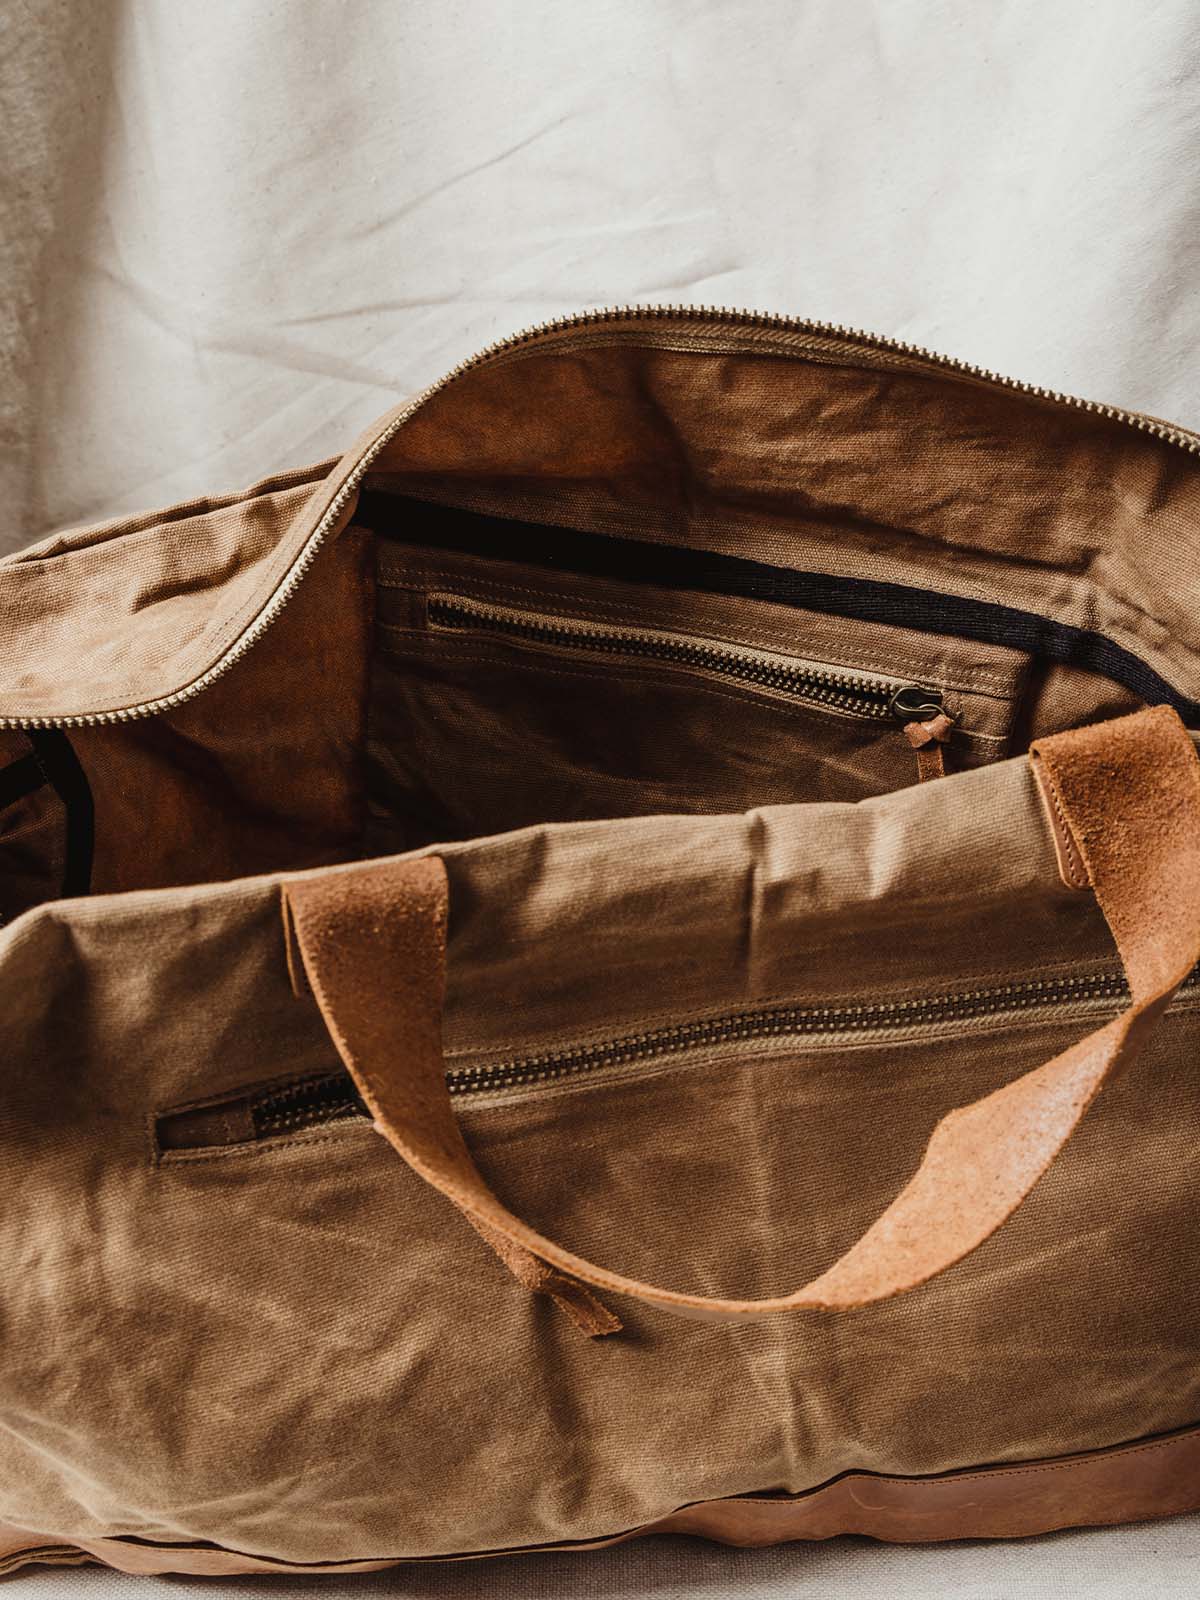 Details of tan weekender bag's internal and external zipper for additional storage.